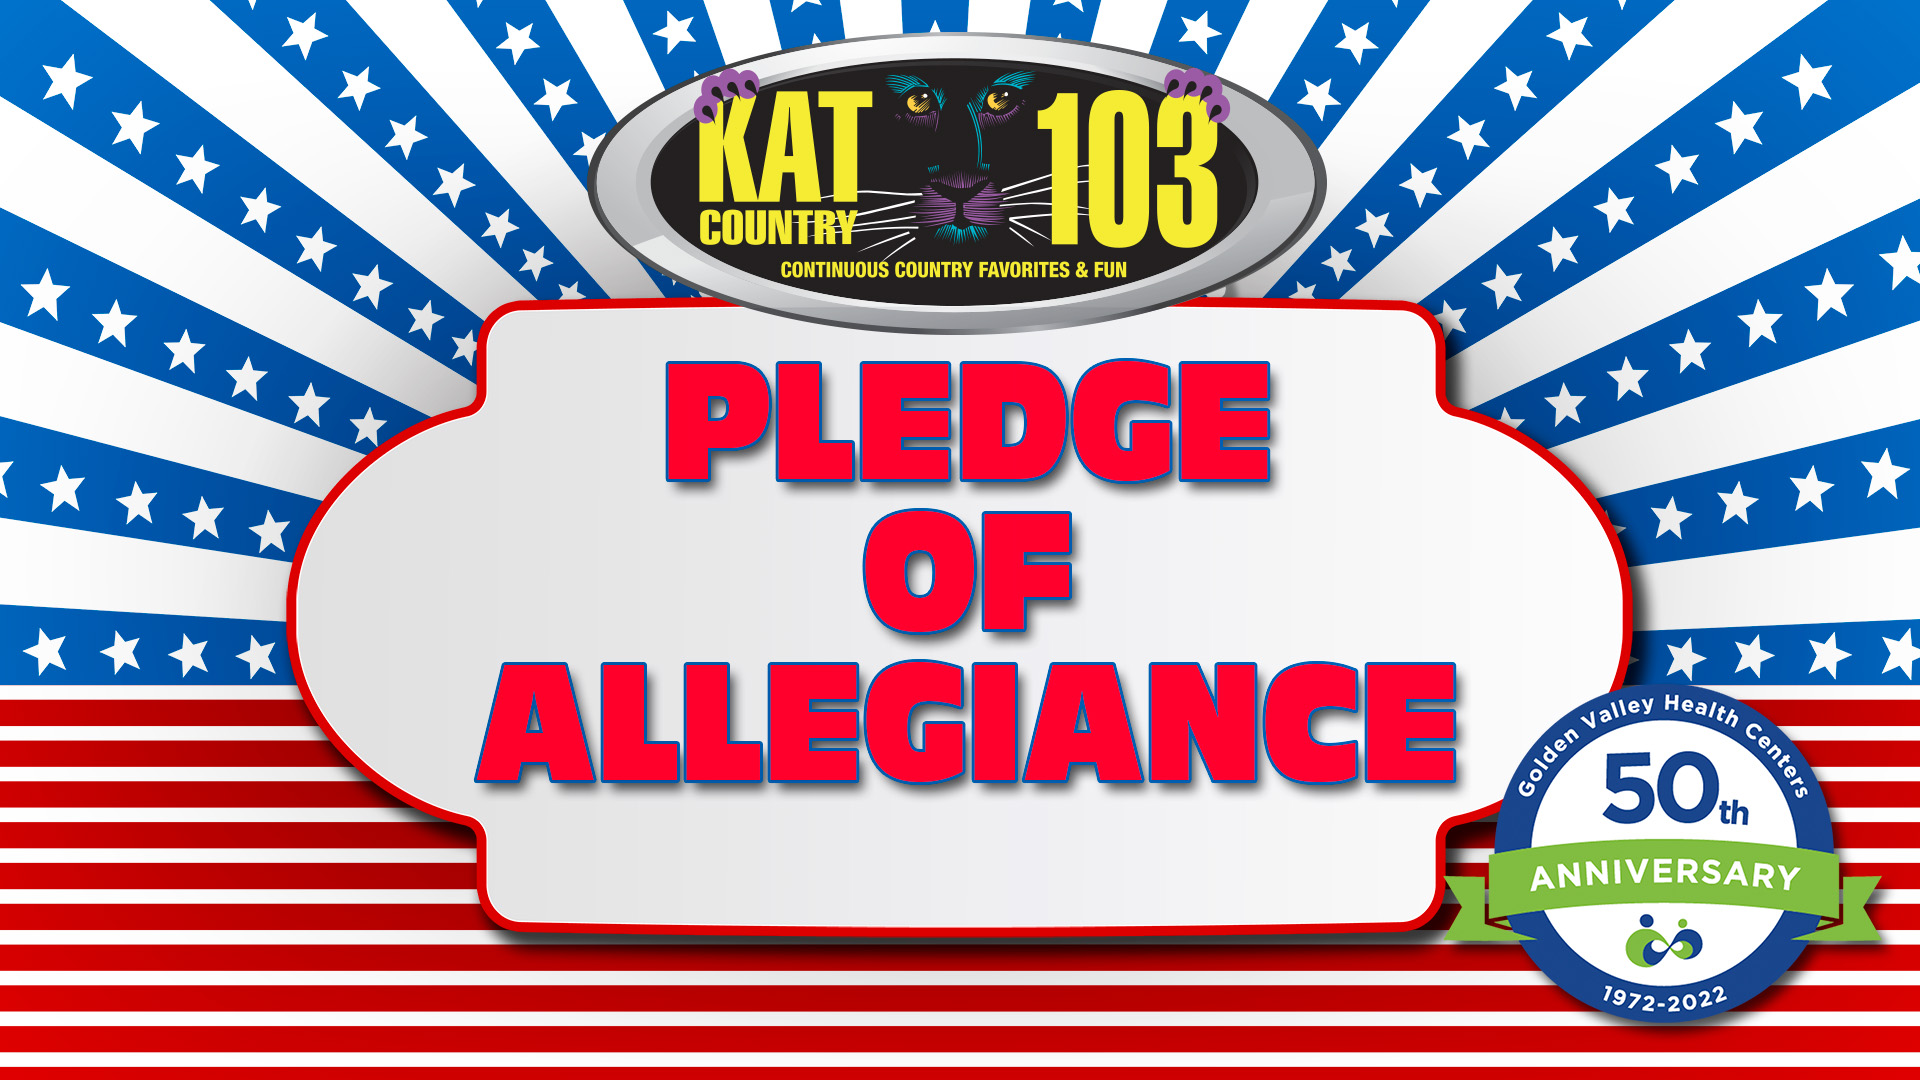 The Pledge of Allegiance!